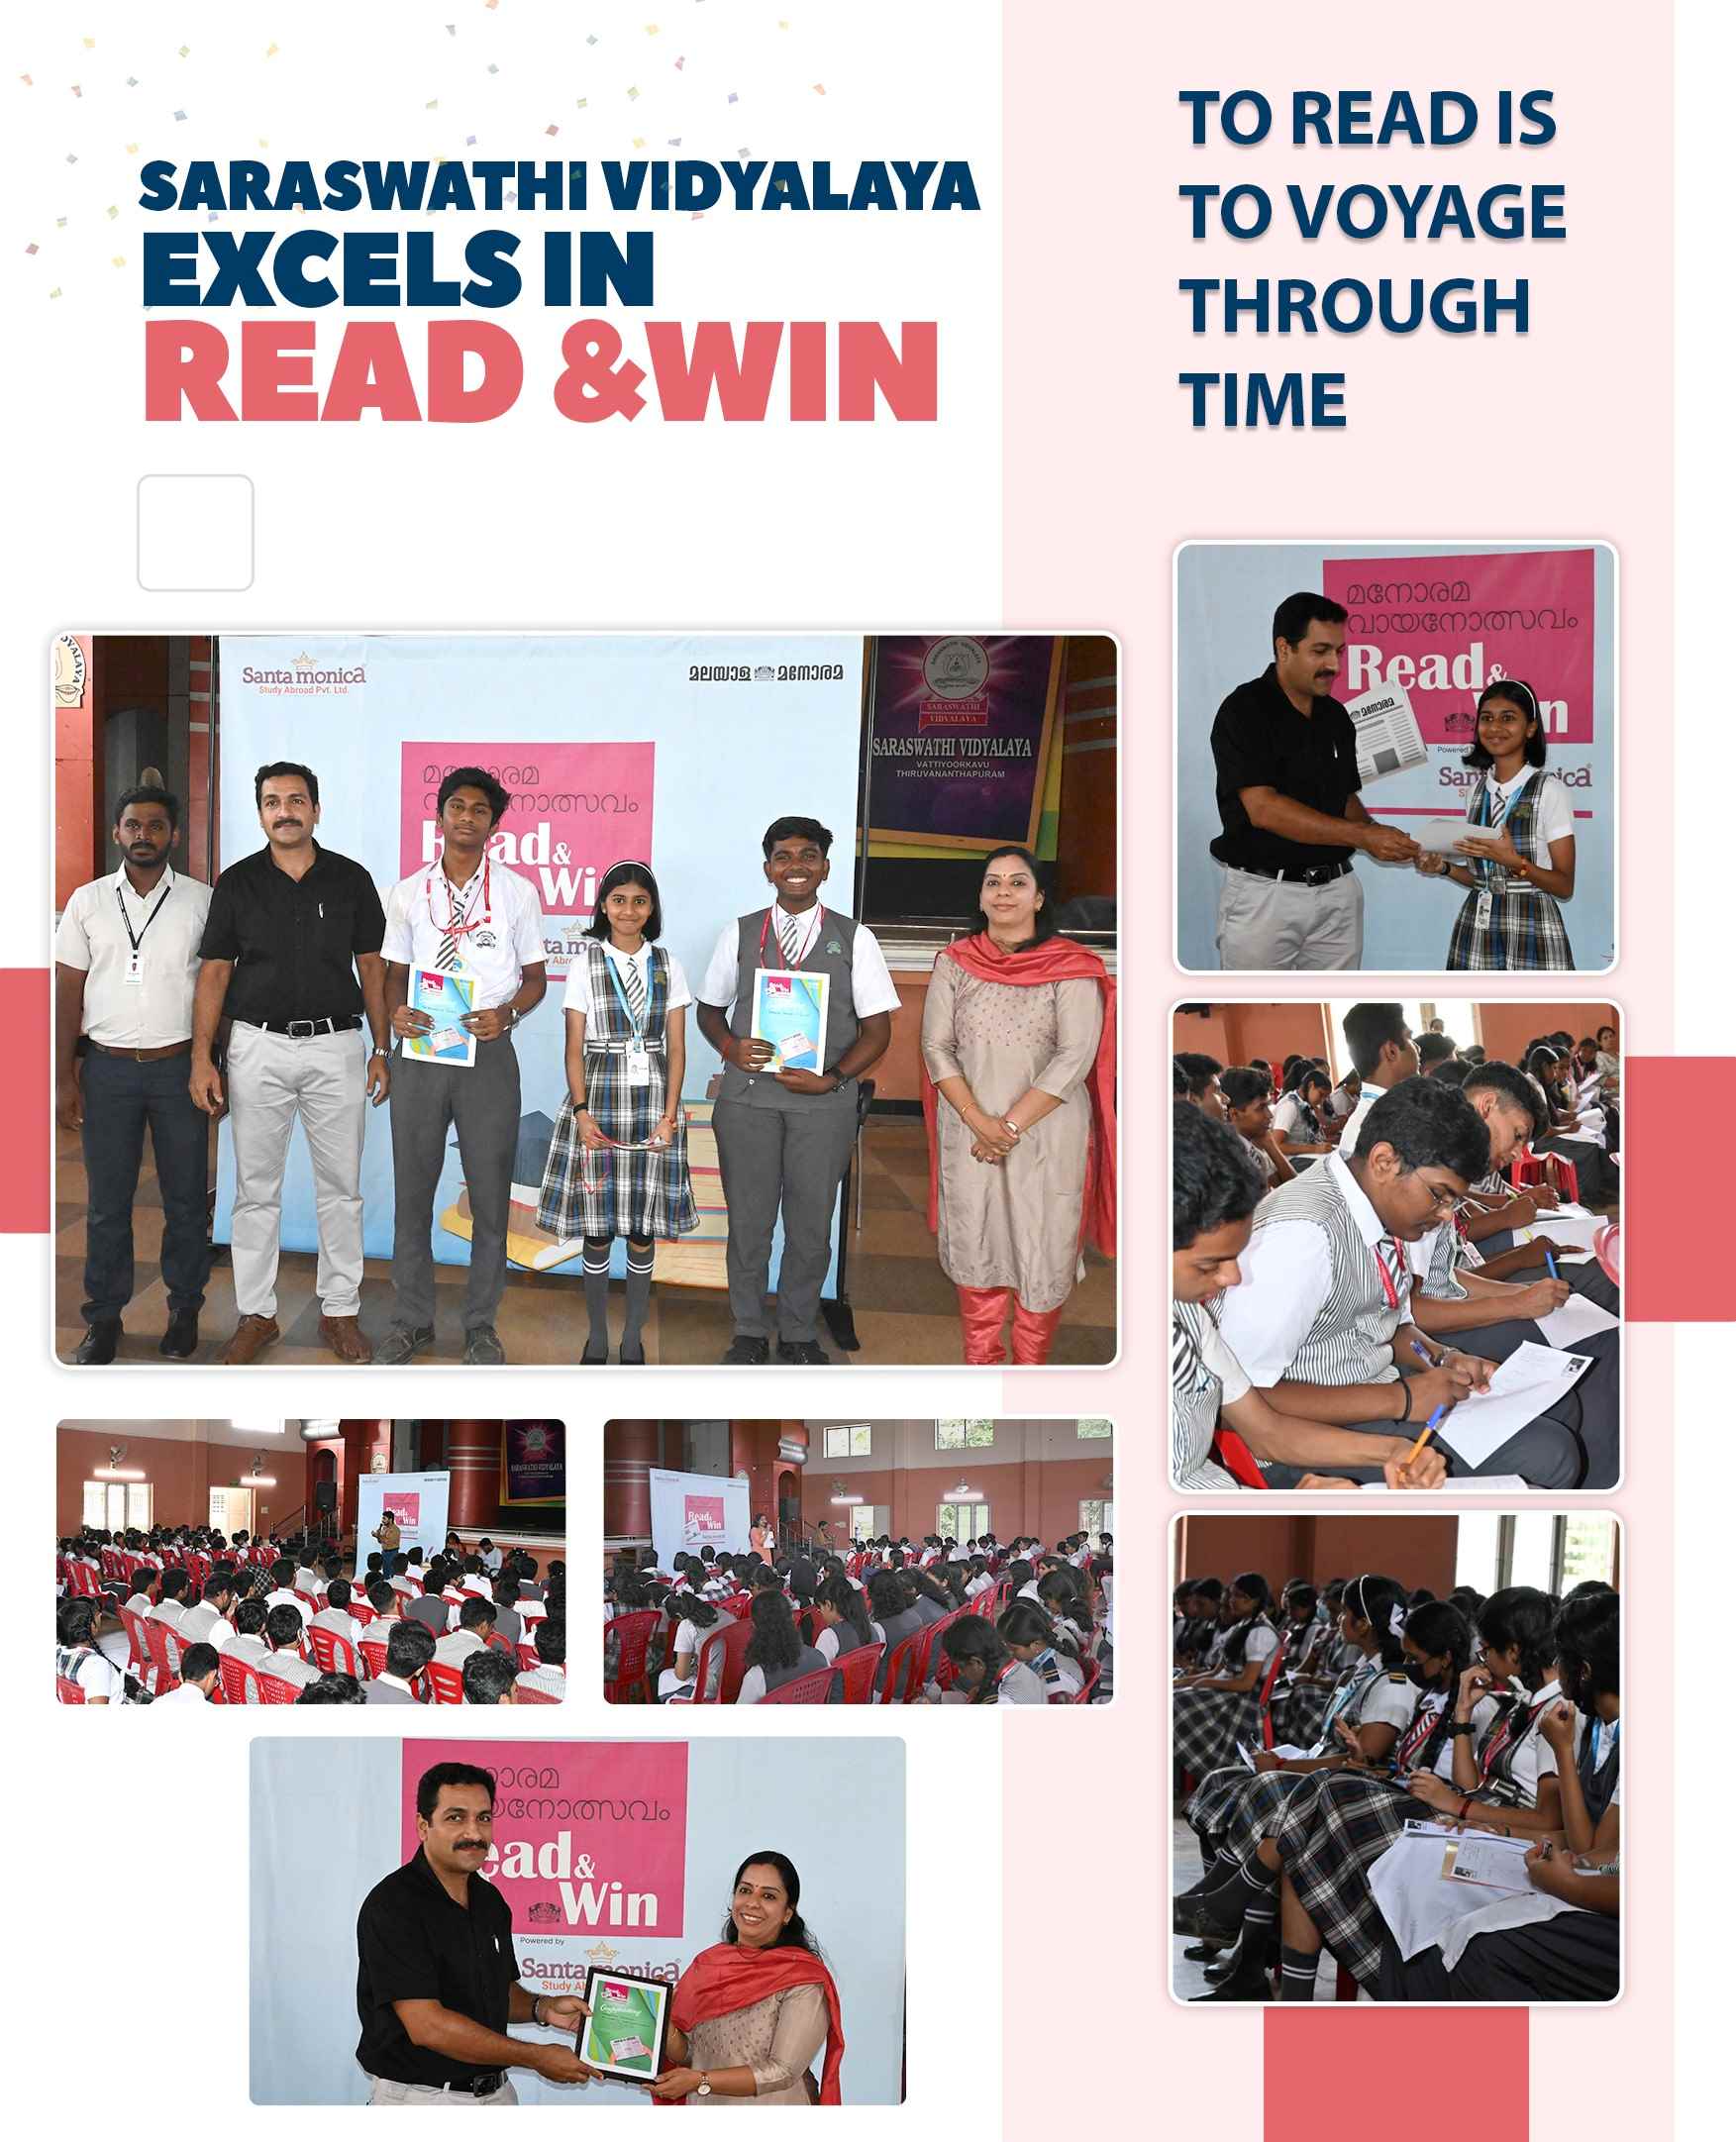 Saraswathi Vidyalaya excels in Read &Win